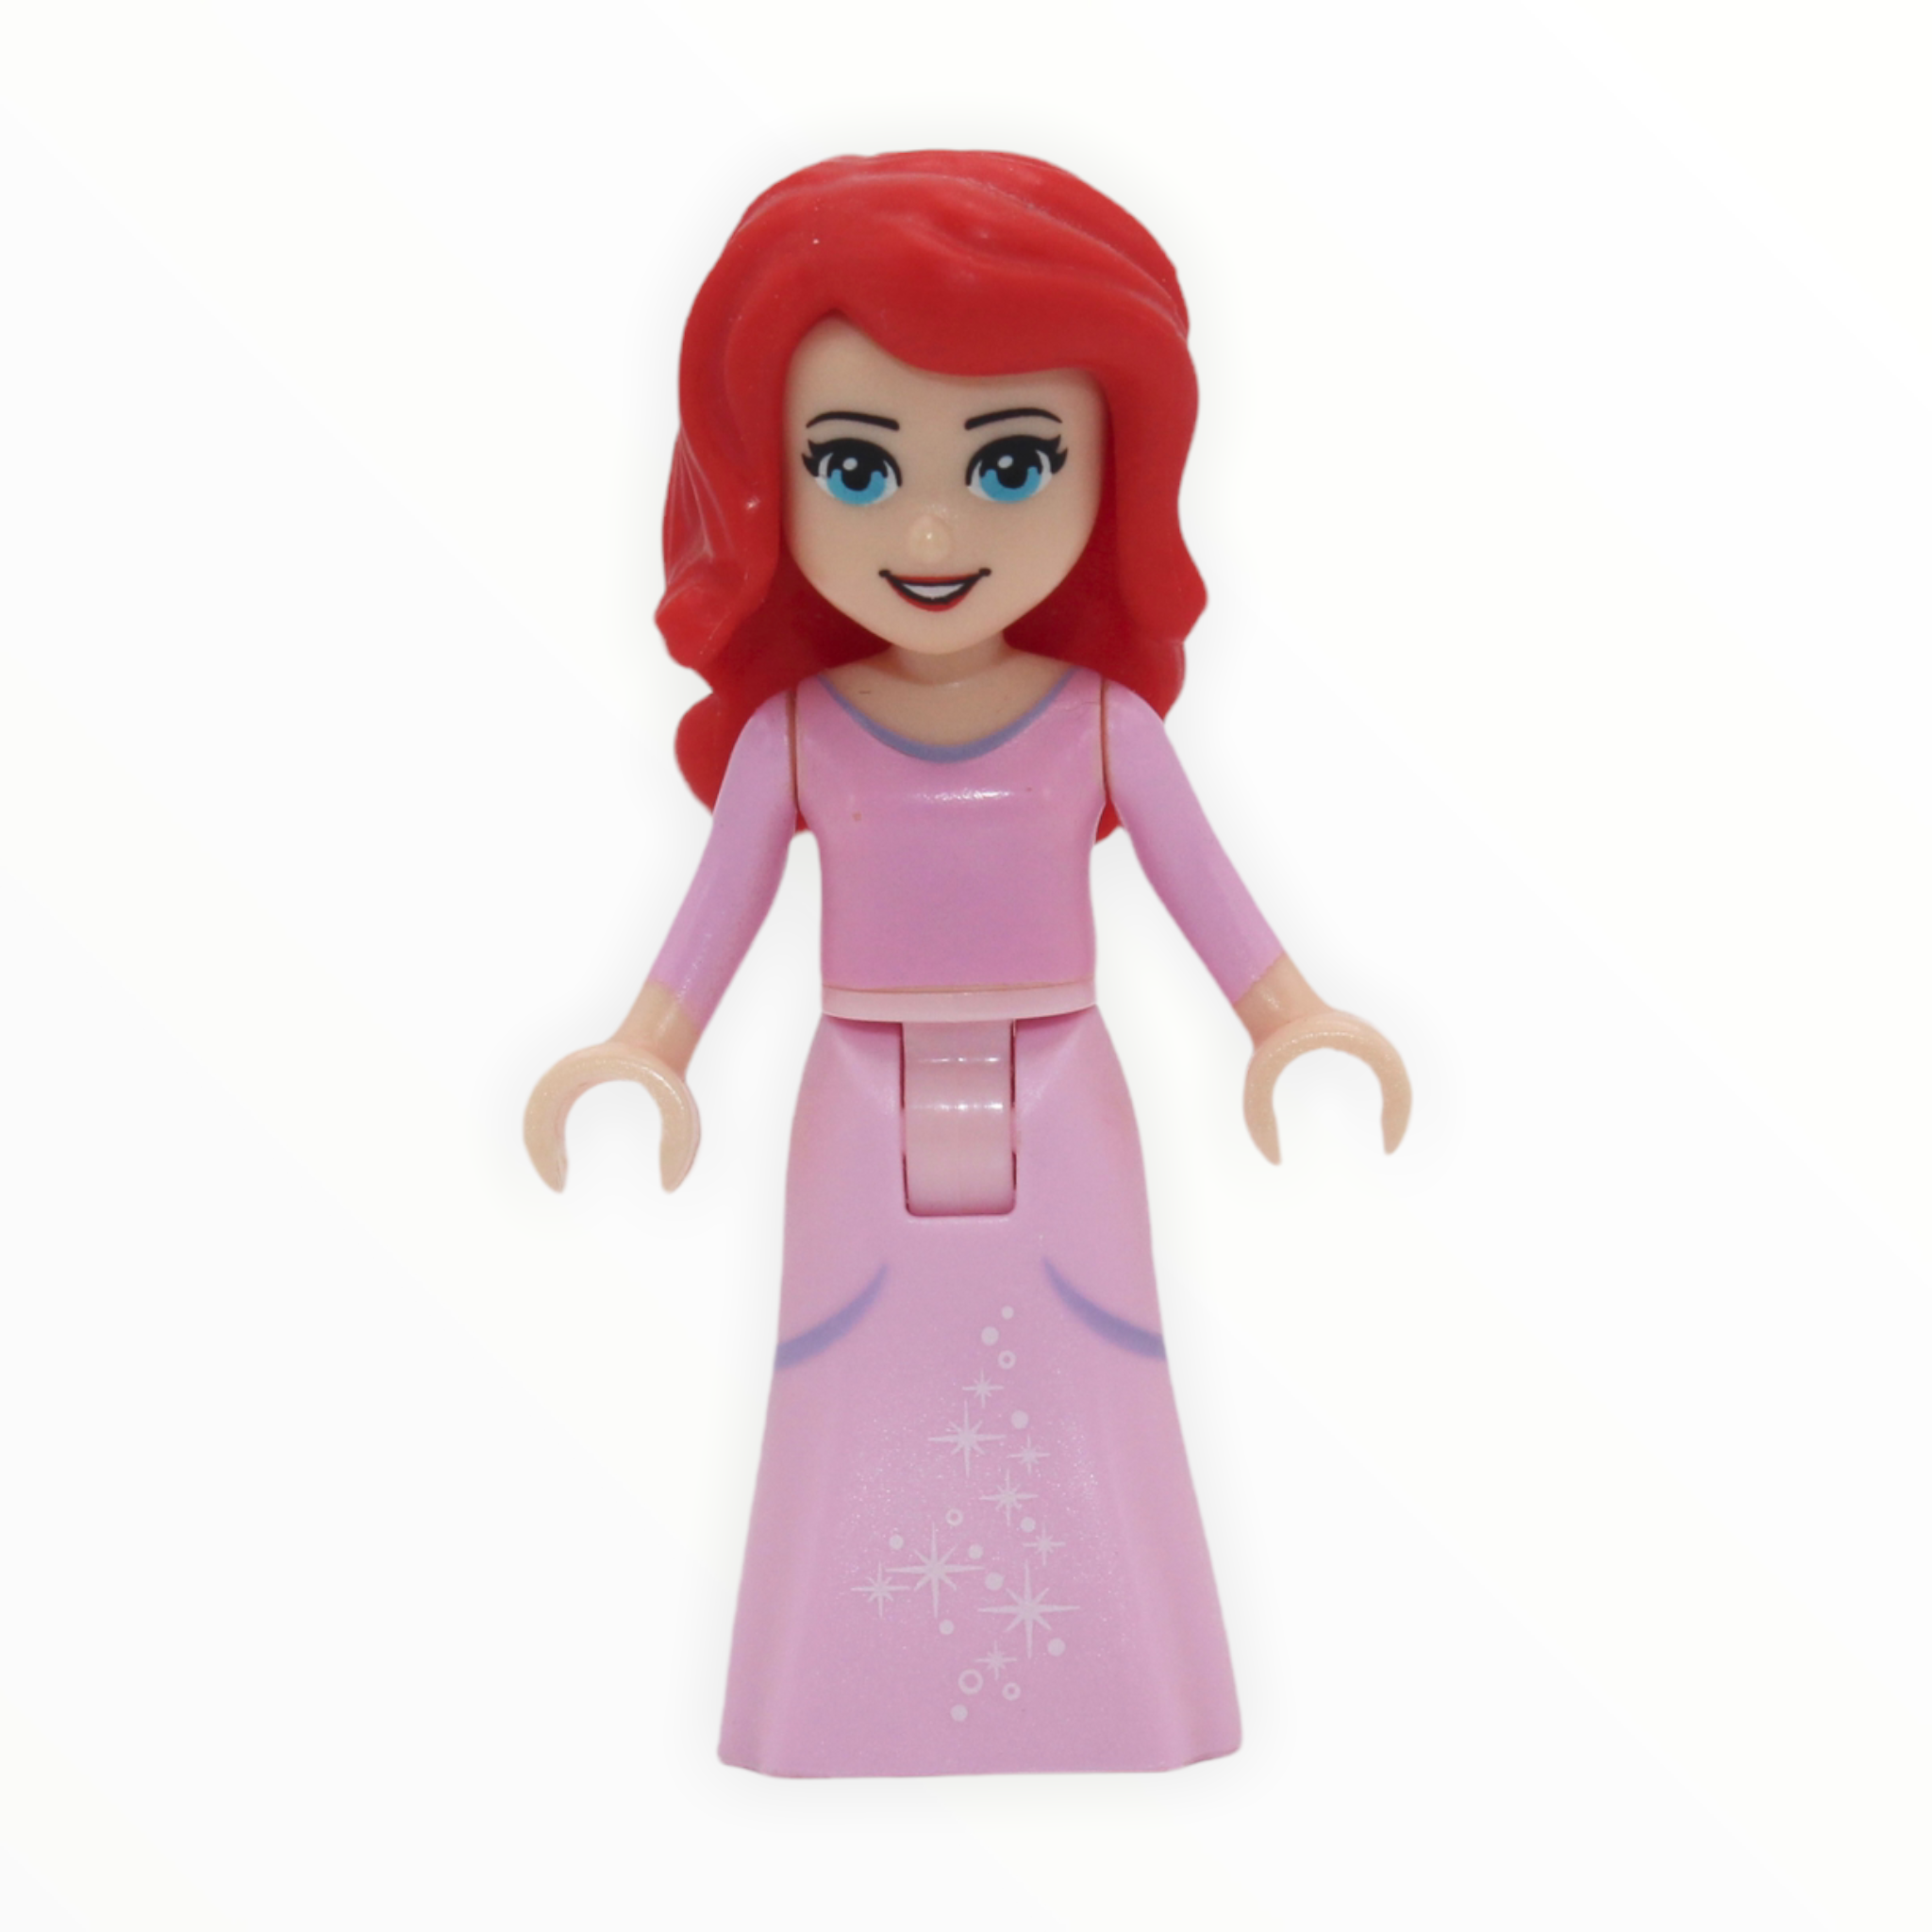 Ariel (Pink Dress with White Stars)